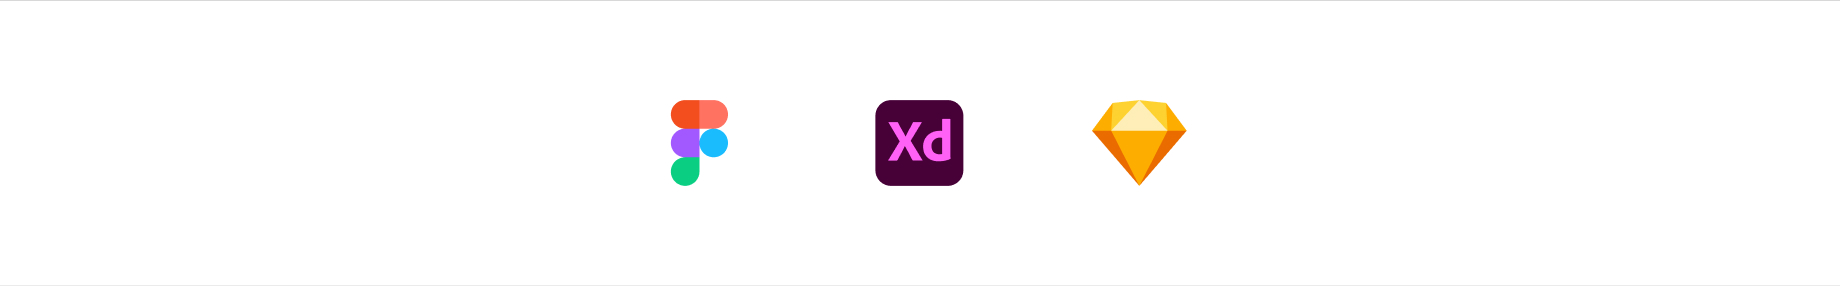 Figma, Adobe XD, and Sketch logos.